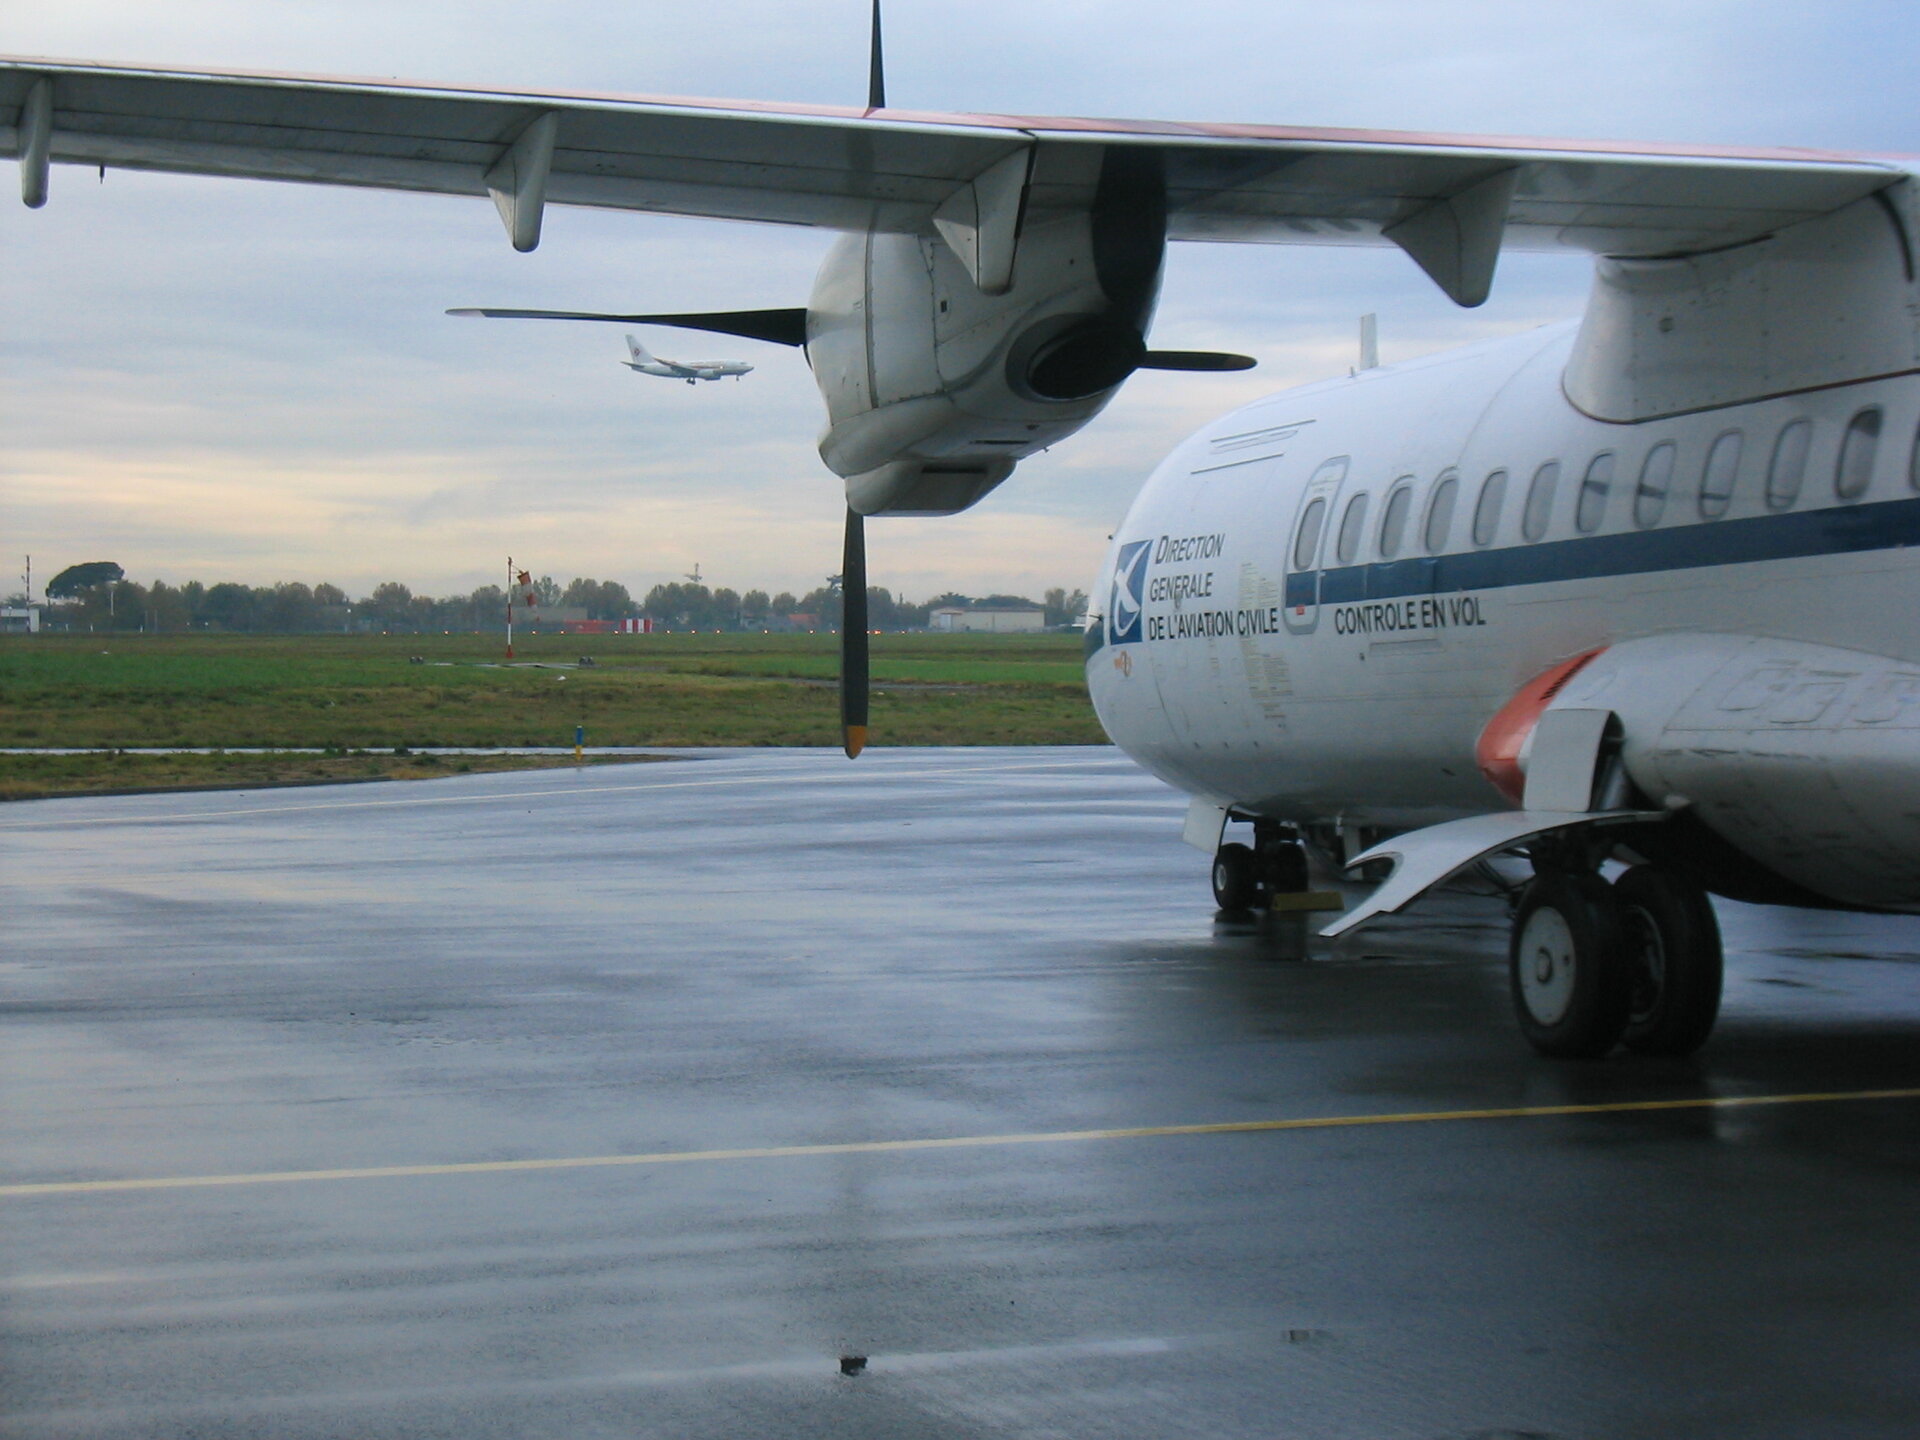 DGAC ATR42 test aircraft